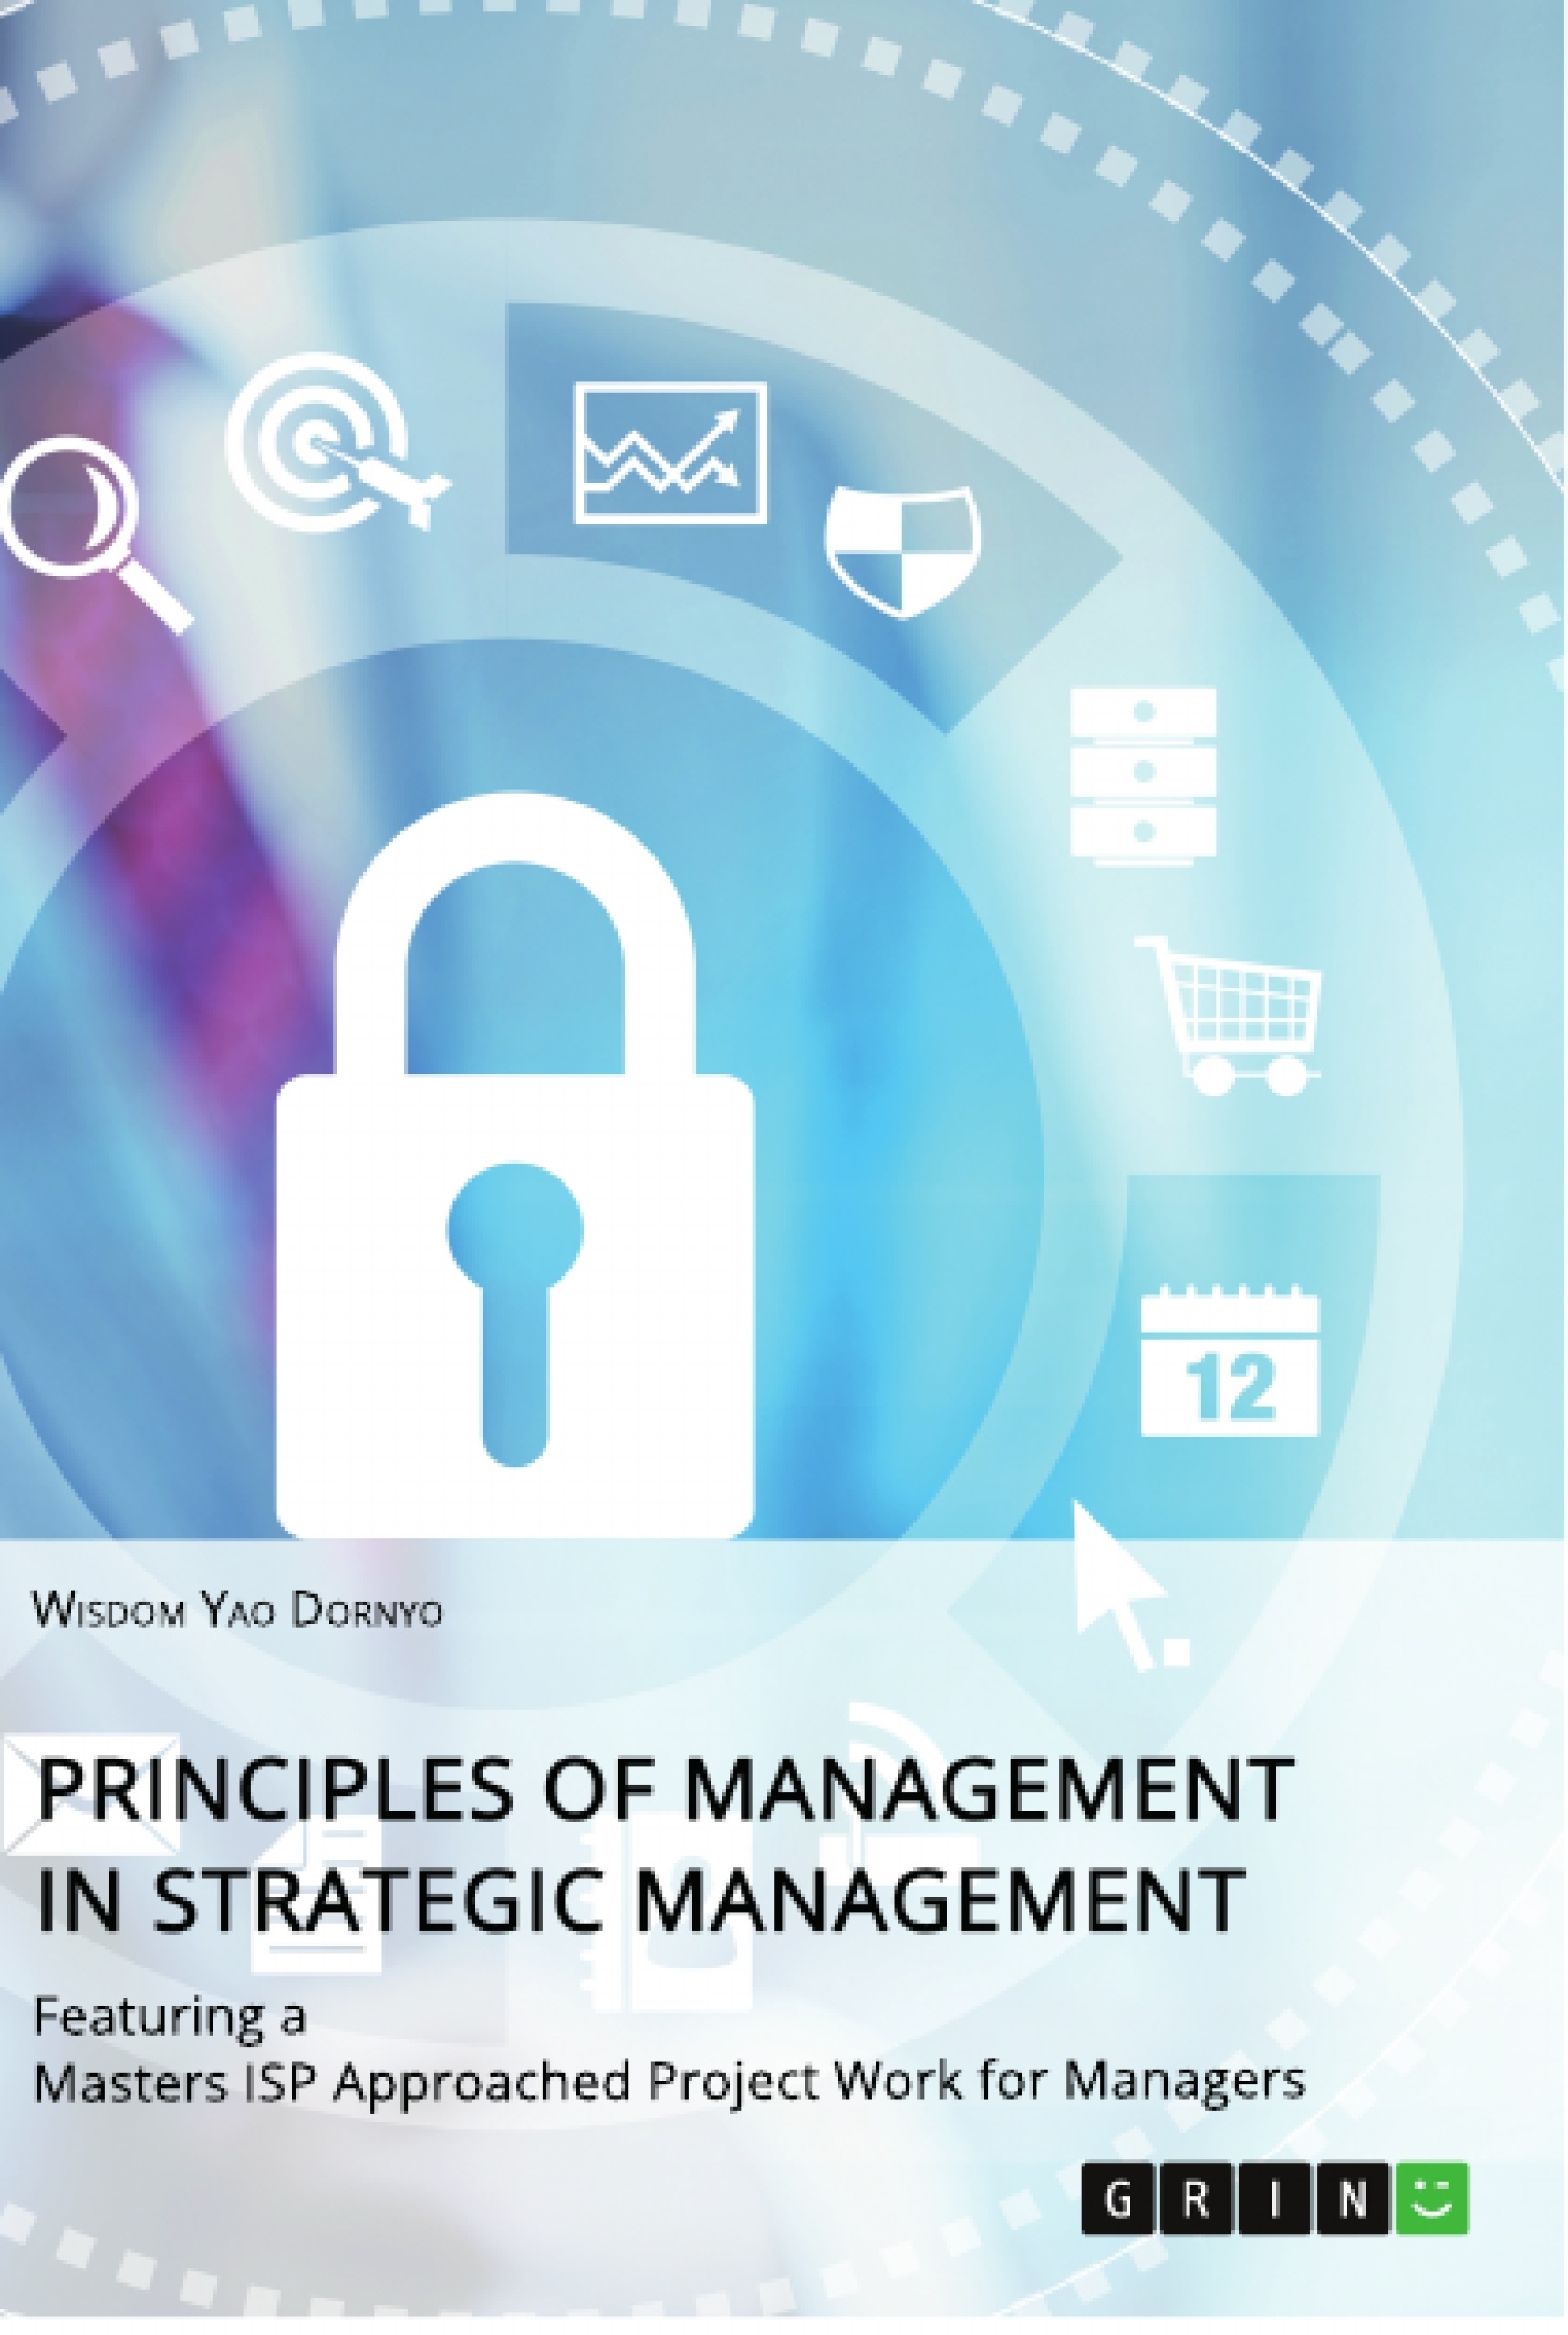 Title: Principles of Management in Strategic Management